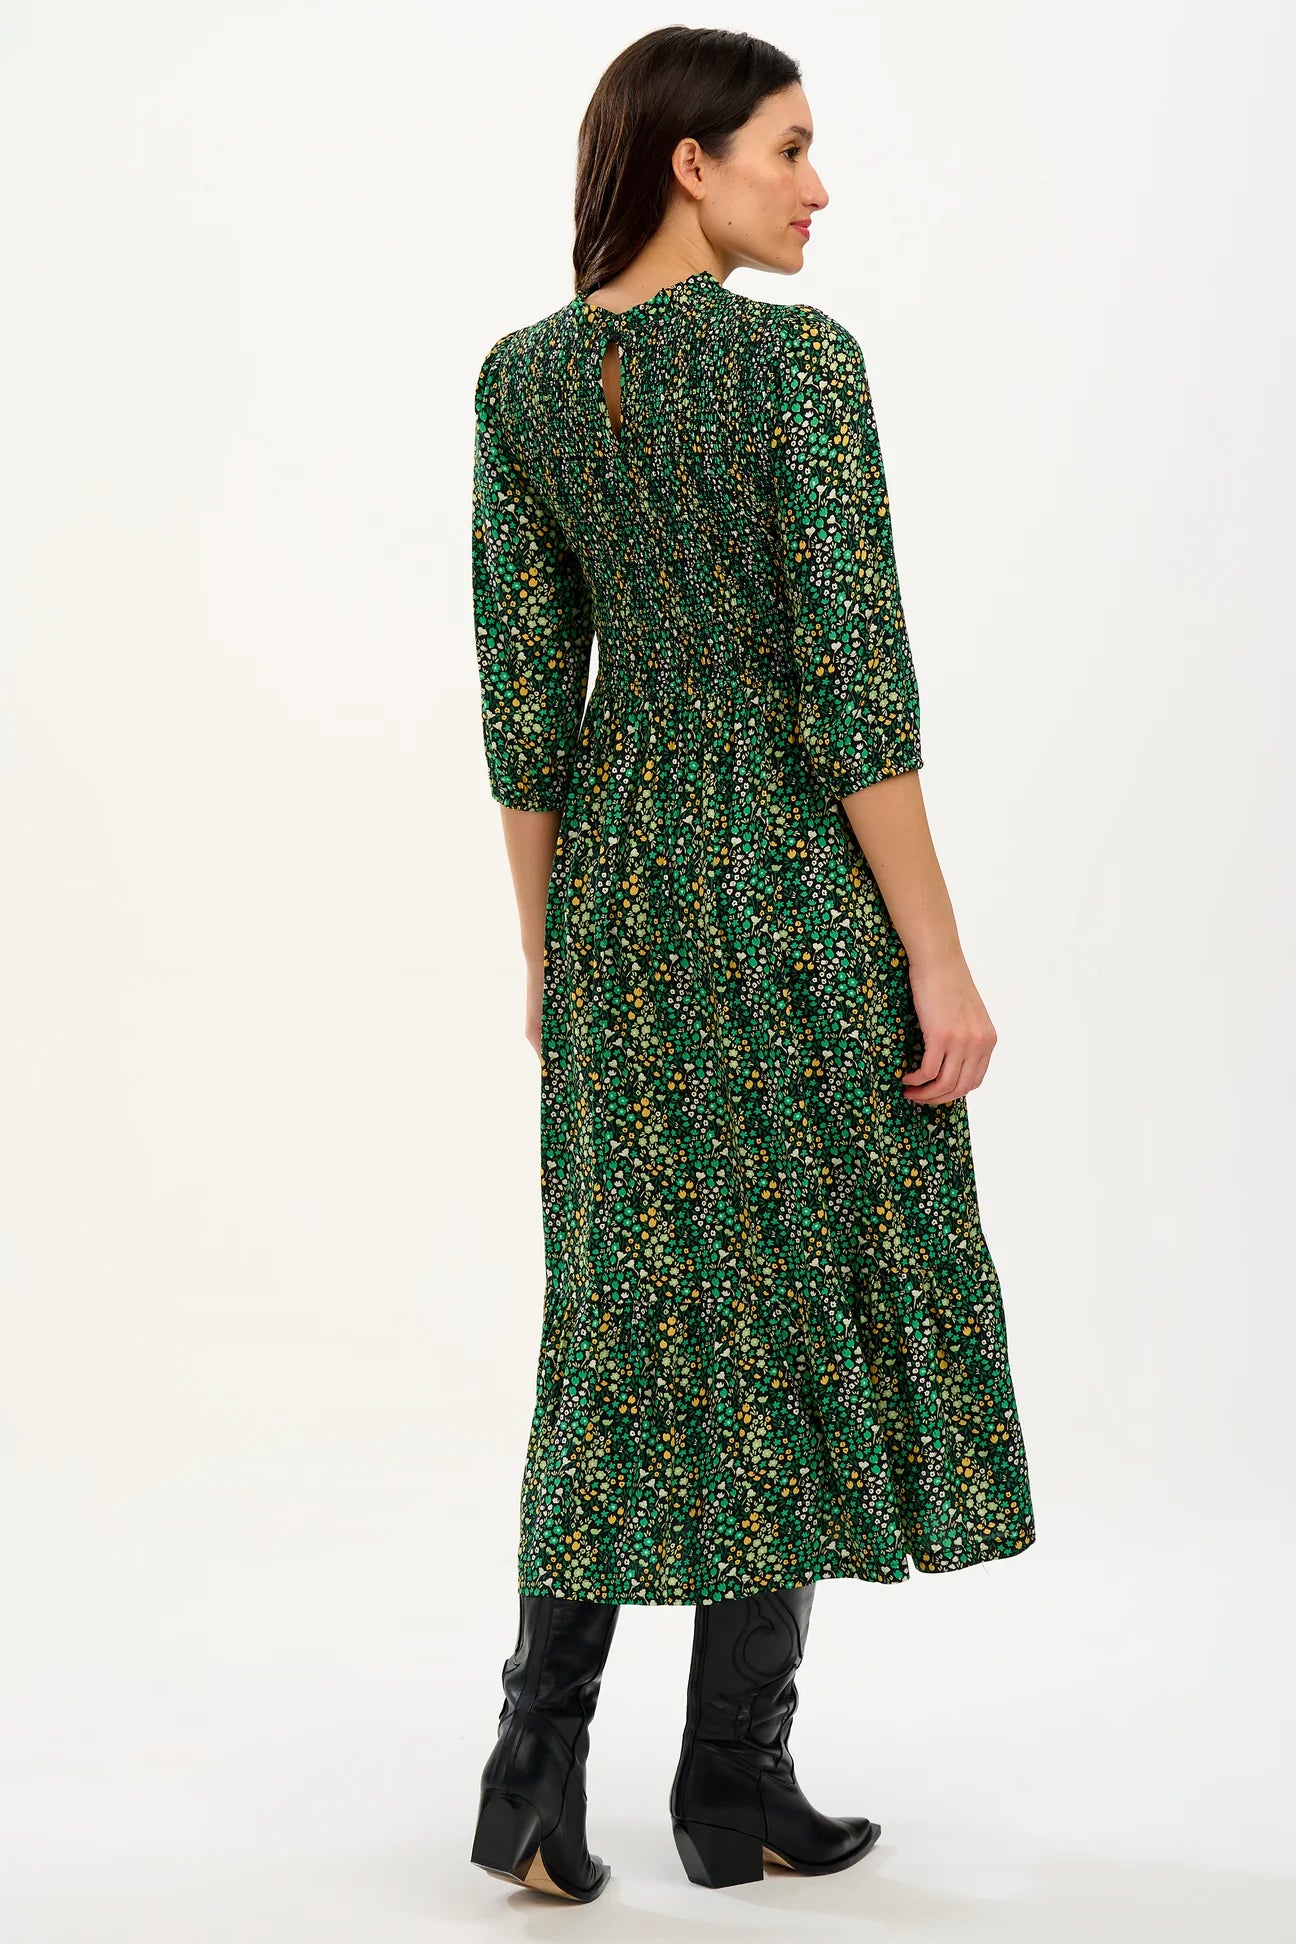 SUGARHILL BRIGHTON-Charmaine Midi Shirred Dress - Black/Green, Ditsy Floral